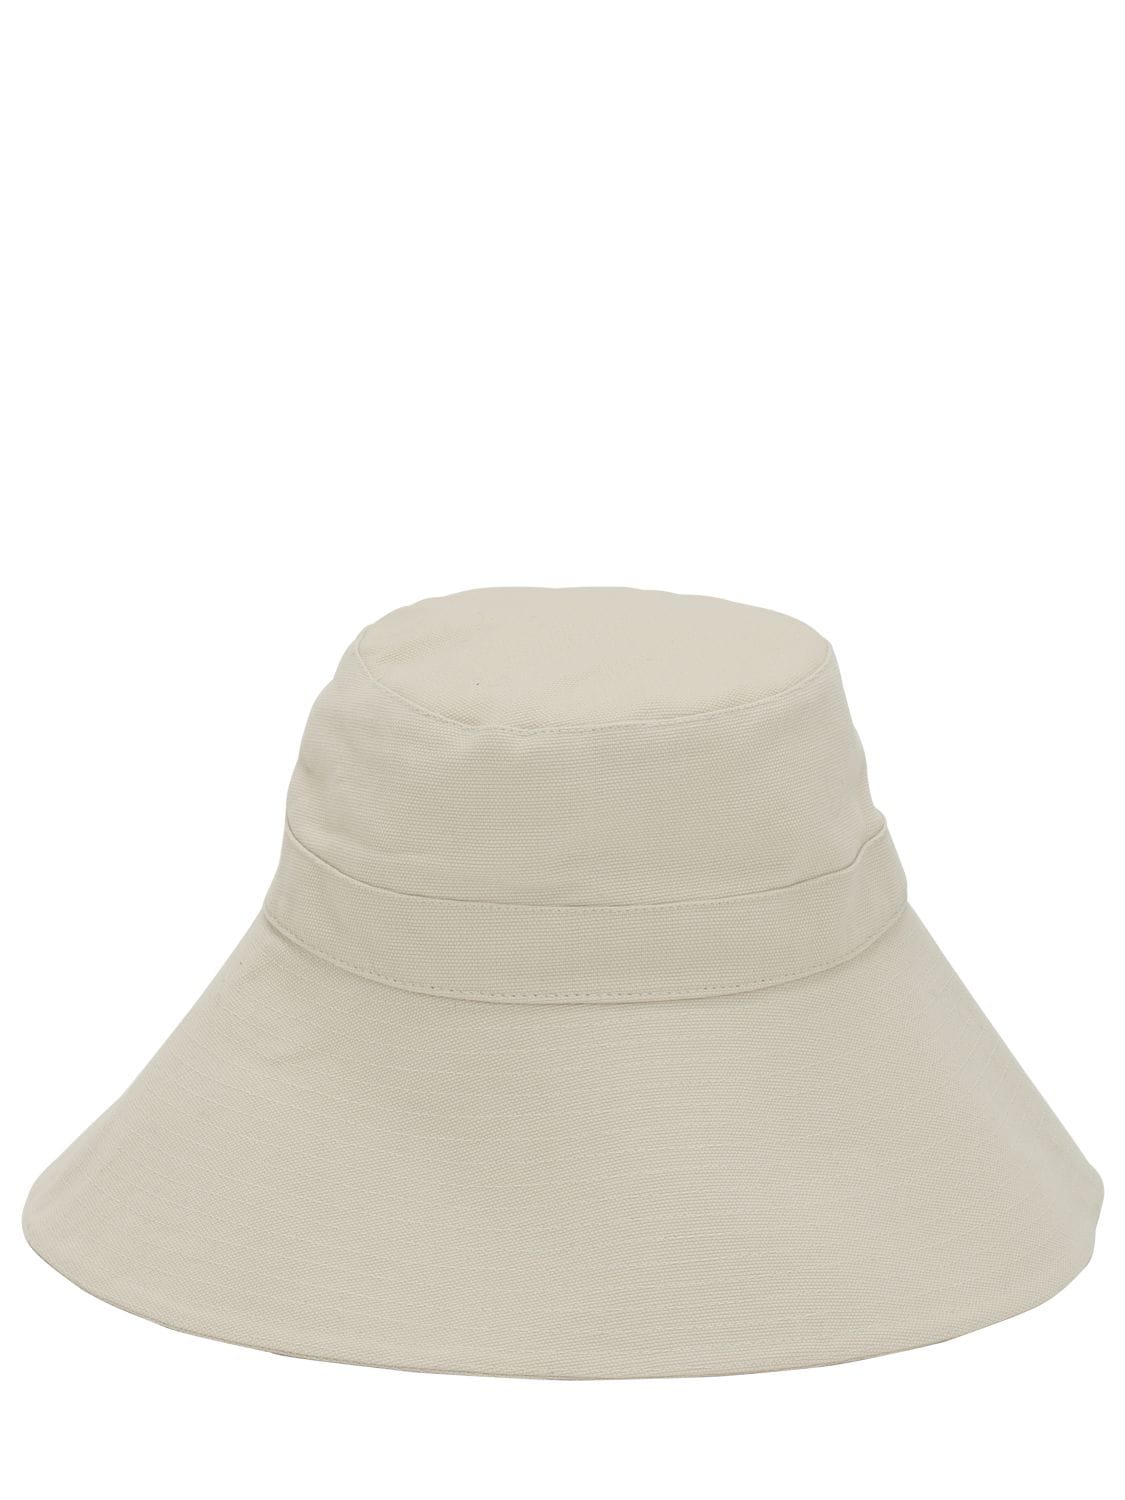 ISABEL MARANT NOLIAE COTTON BUCKET HAT,71IJ59014-MJNFQW2